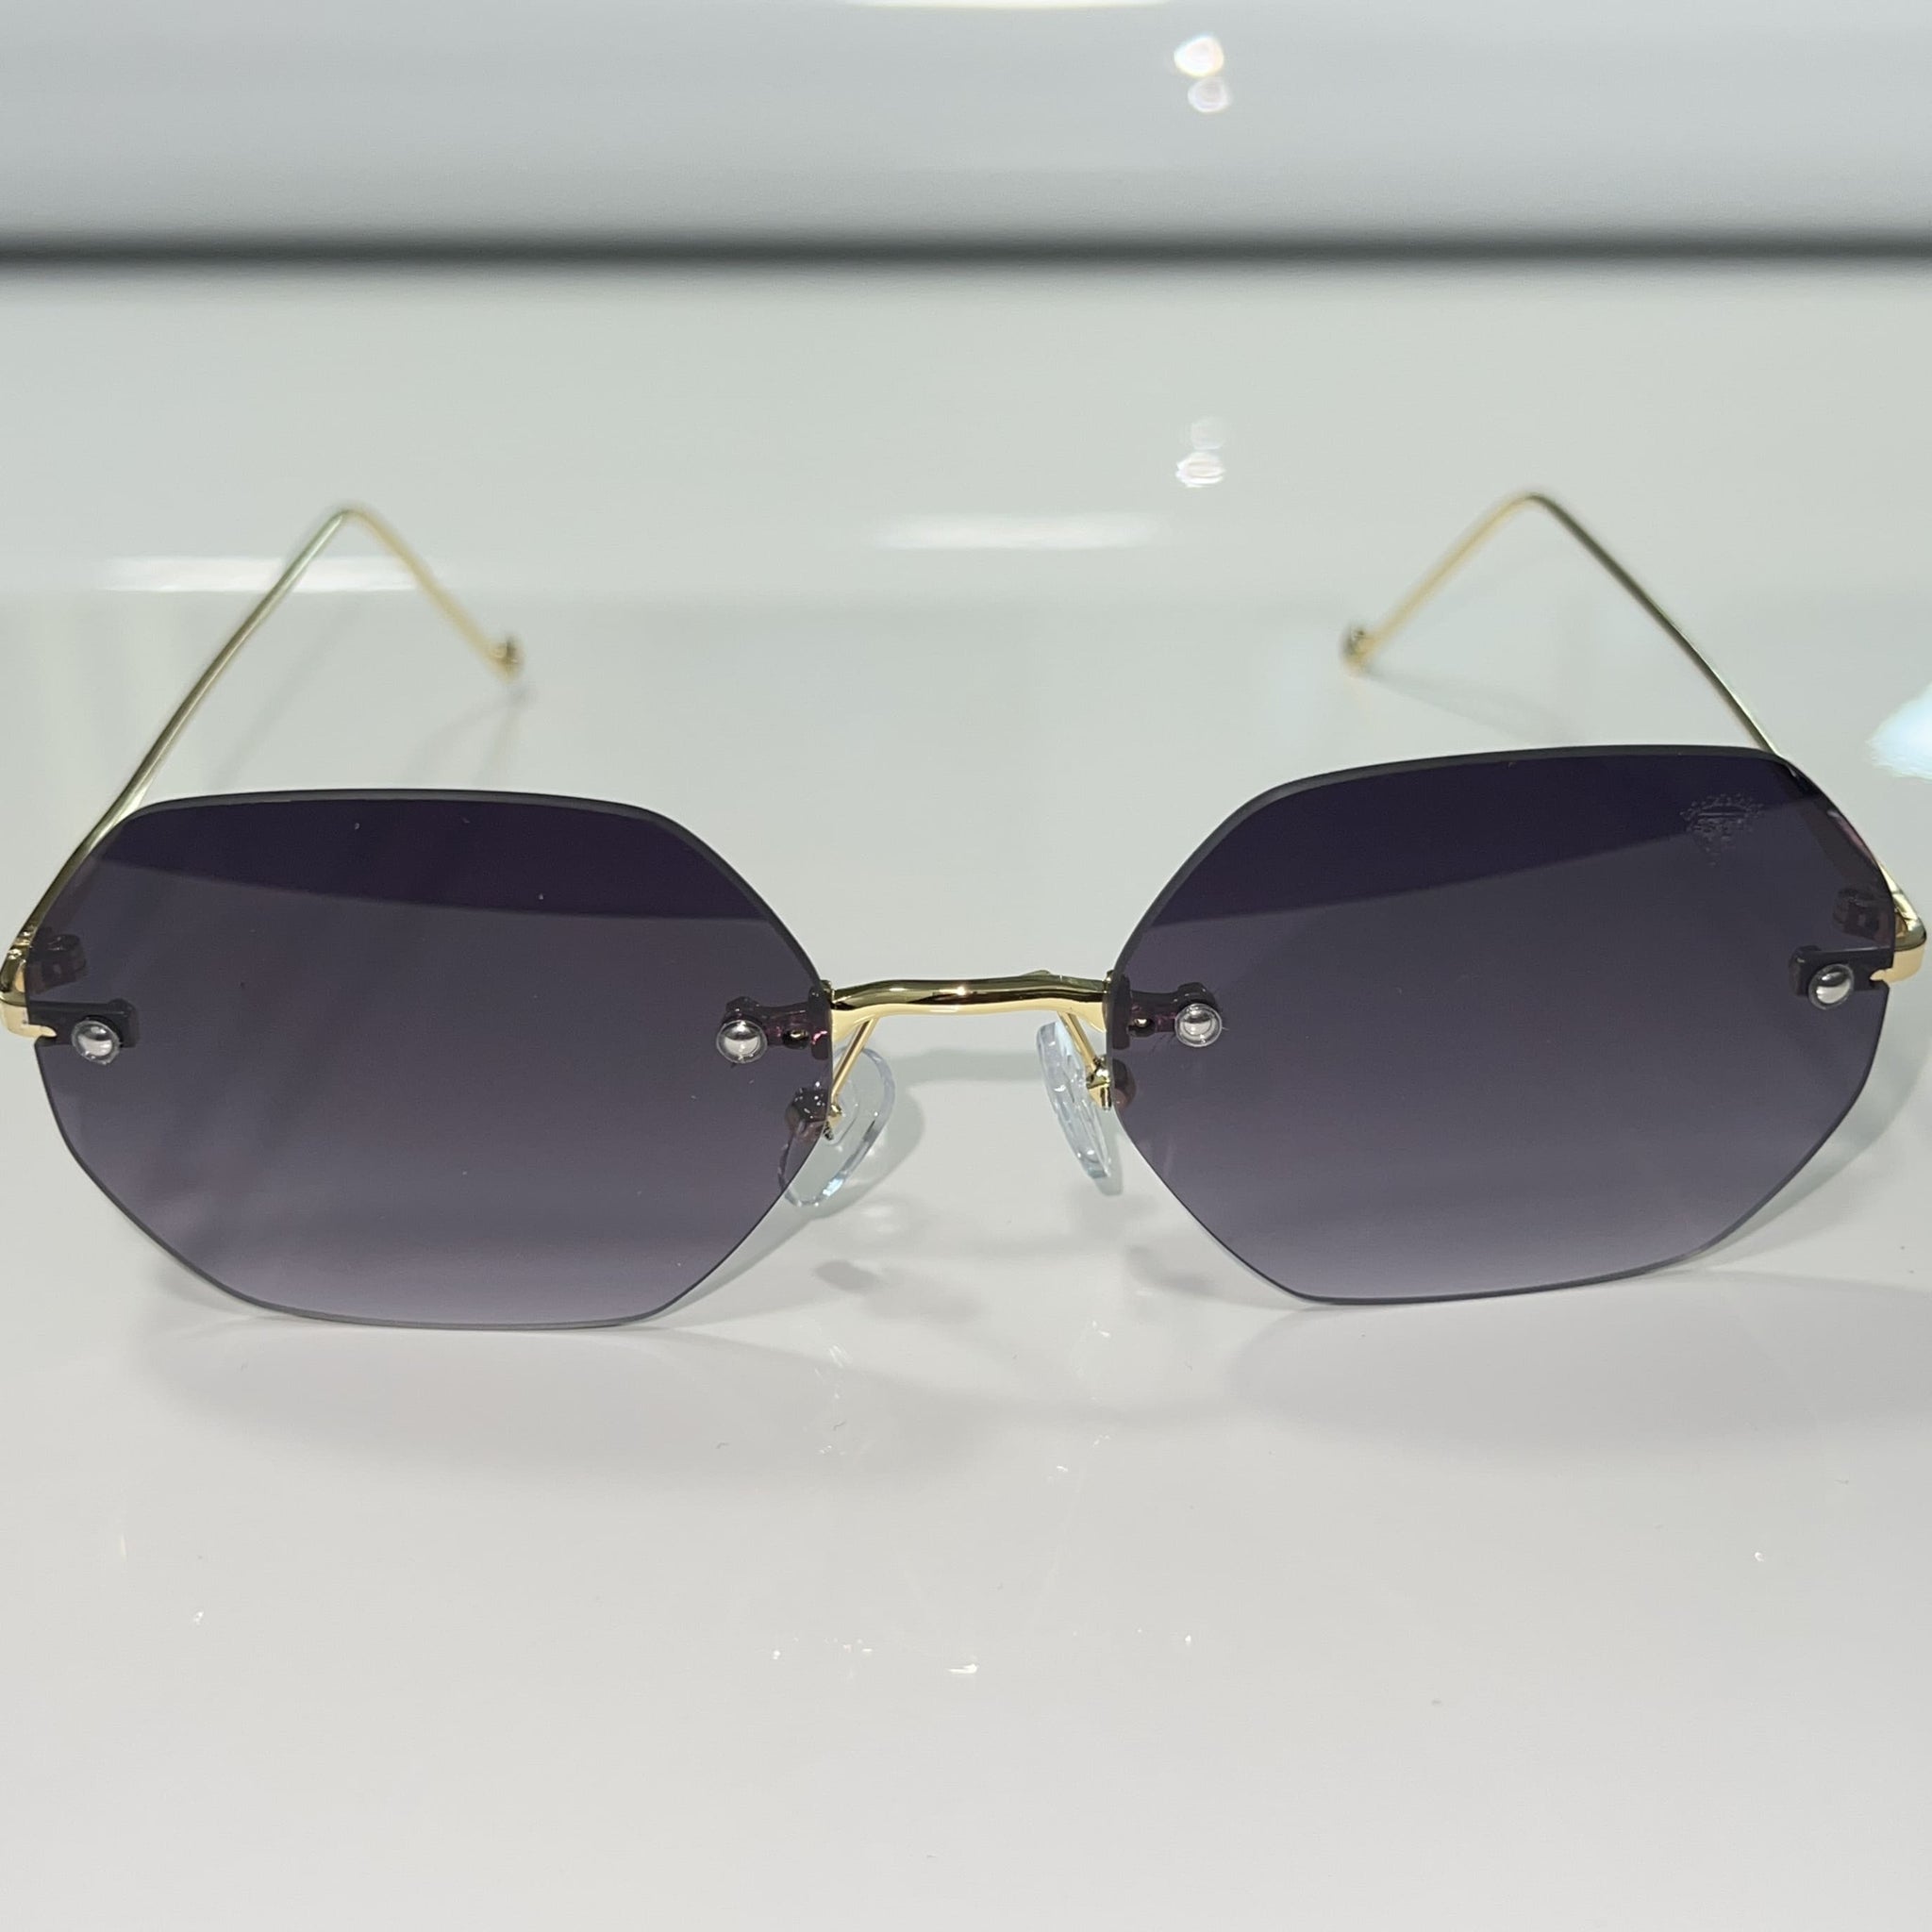 Star Glasses - Sehgal Glasses - 14k gold plated - Black Shade